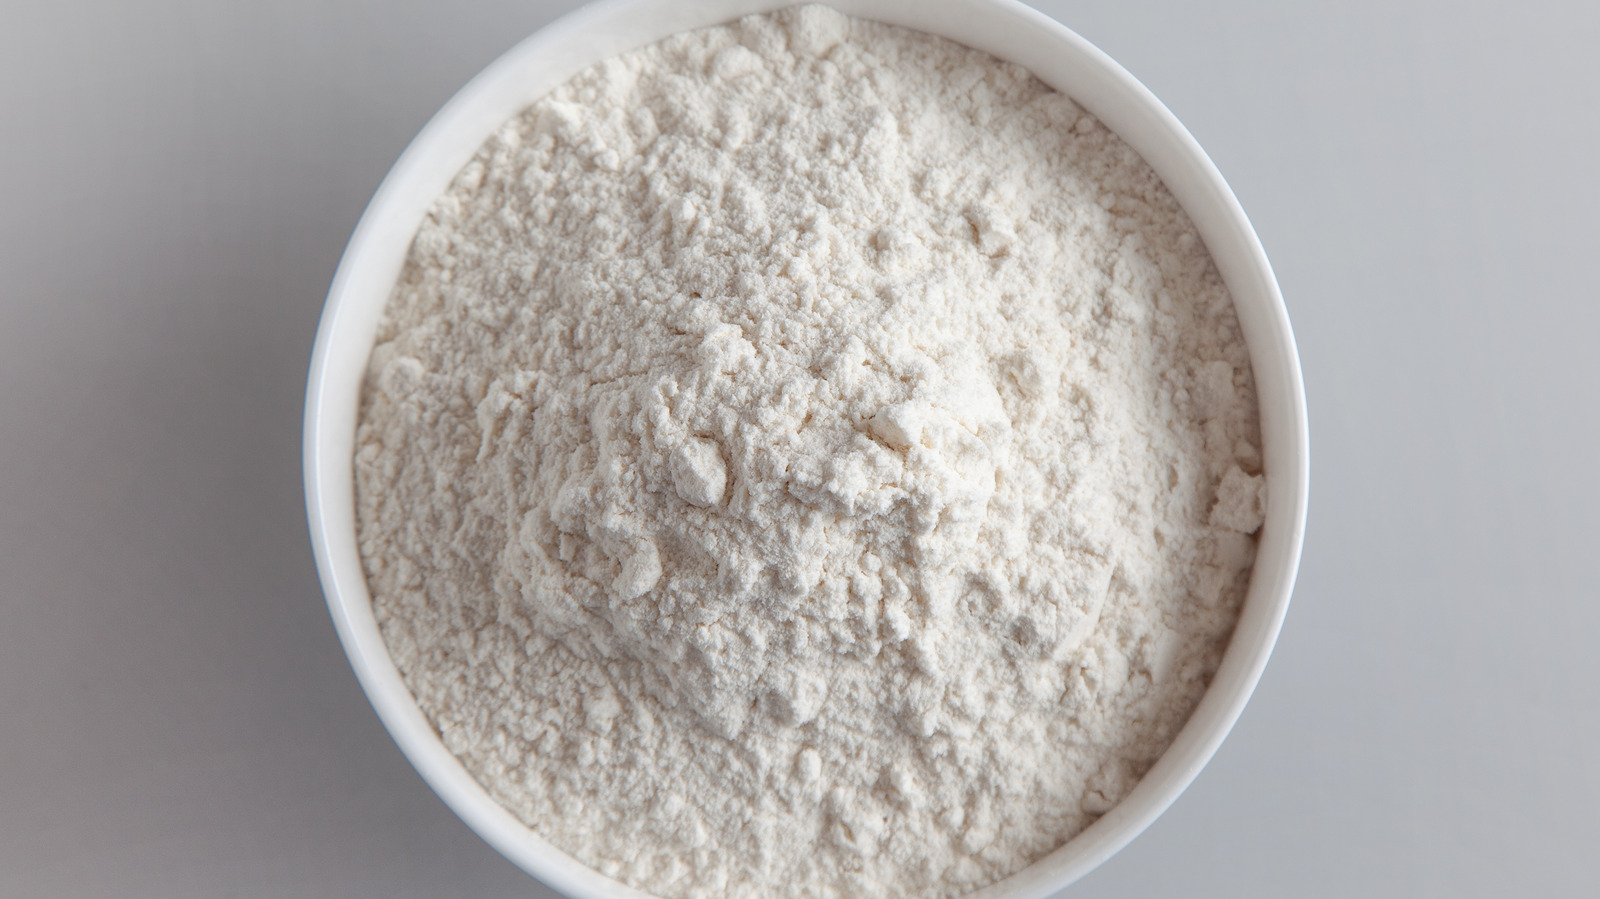 Does Baking Powder Go Bad?